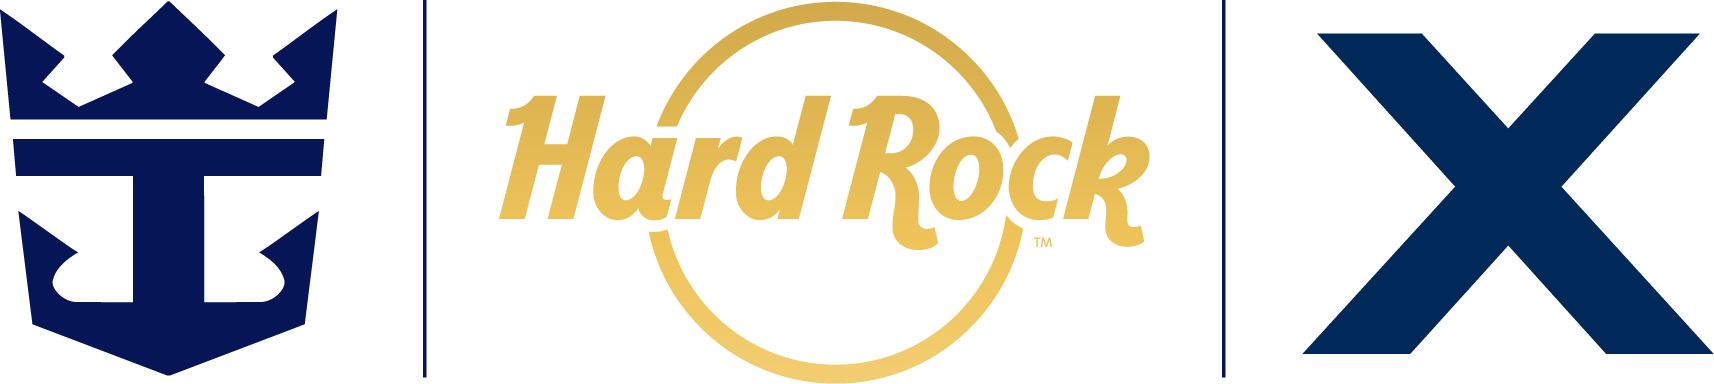 Logos for Royal Caribbean, Hard Rock and Celebrity Cruises 